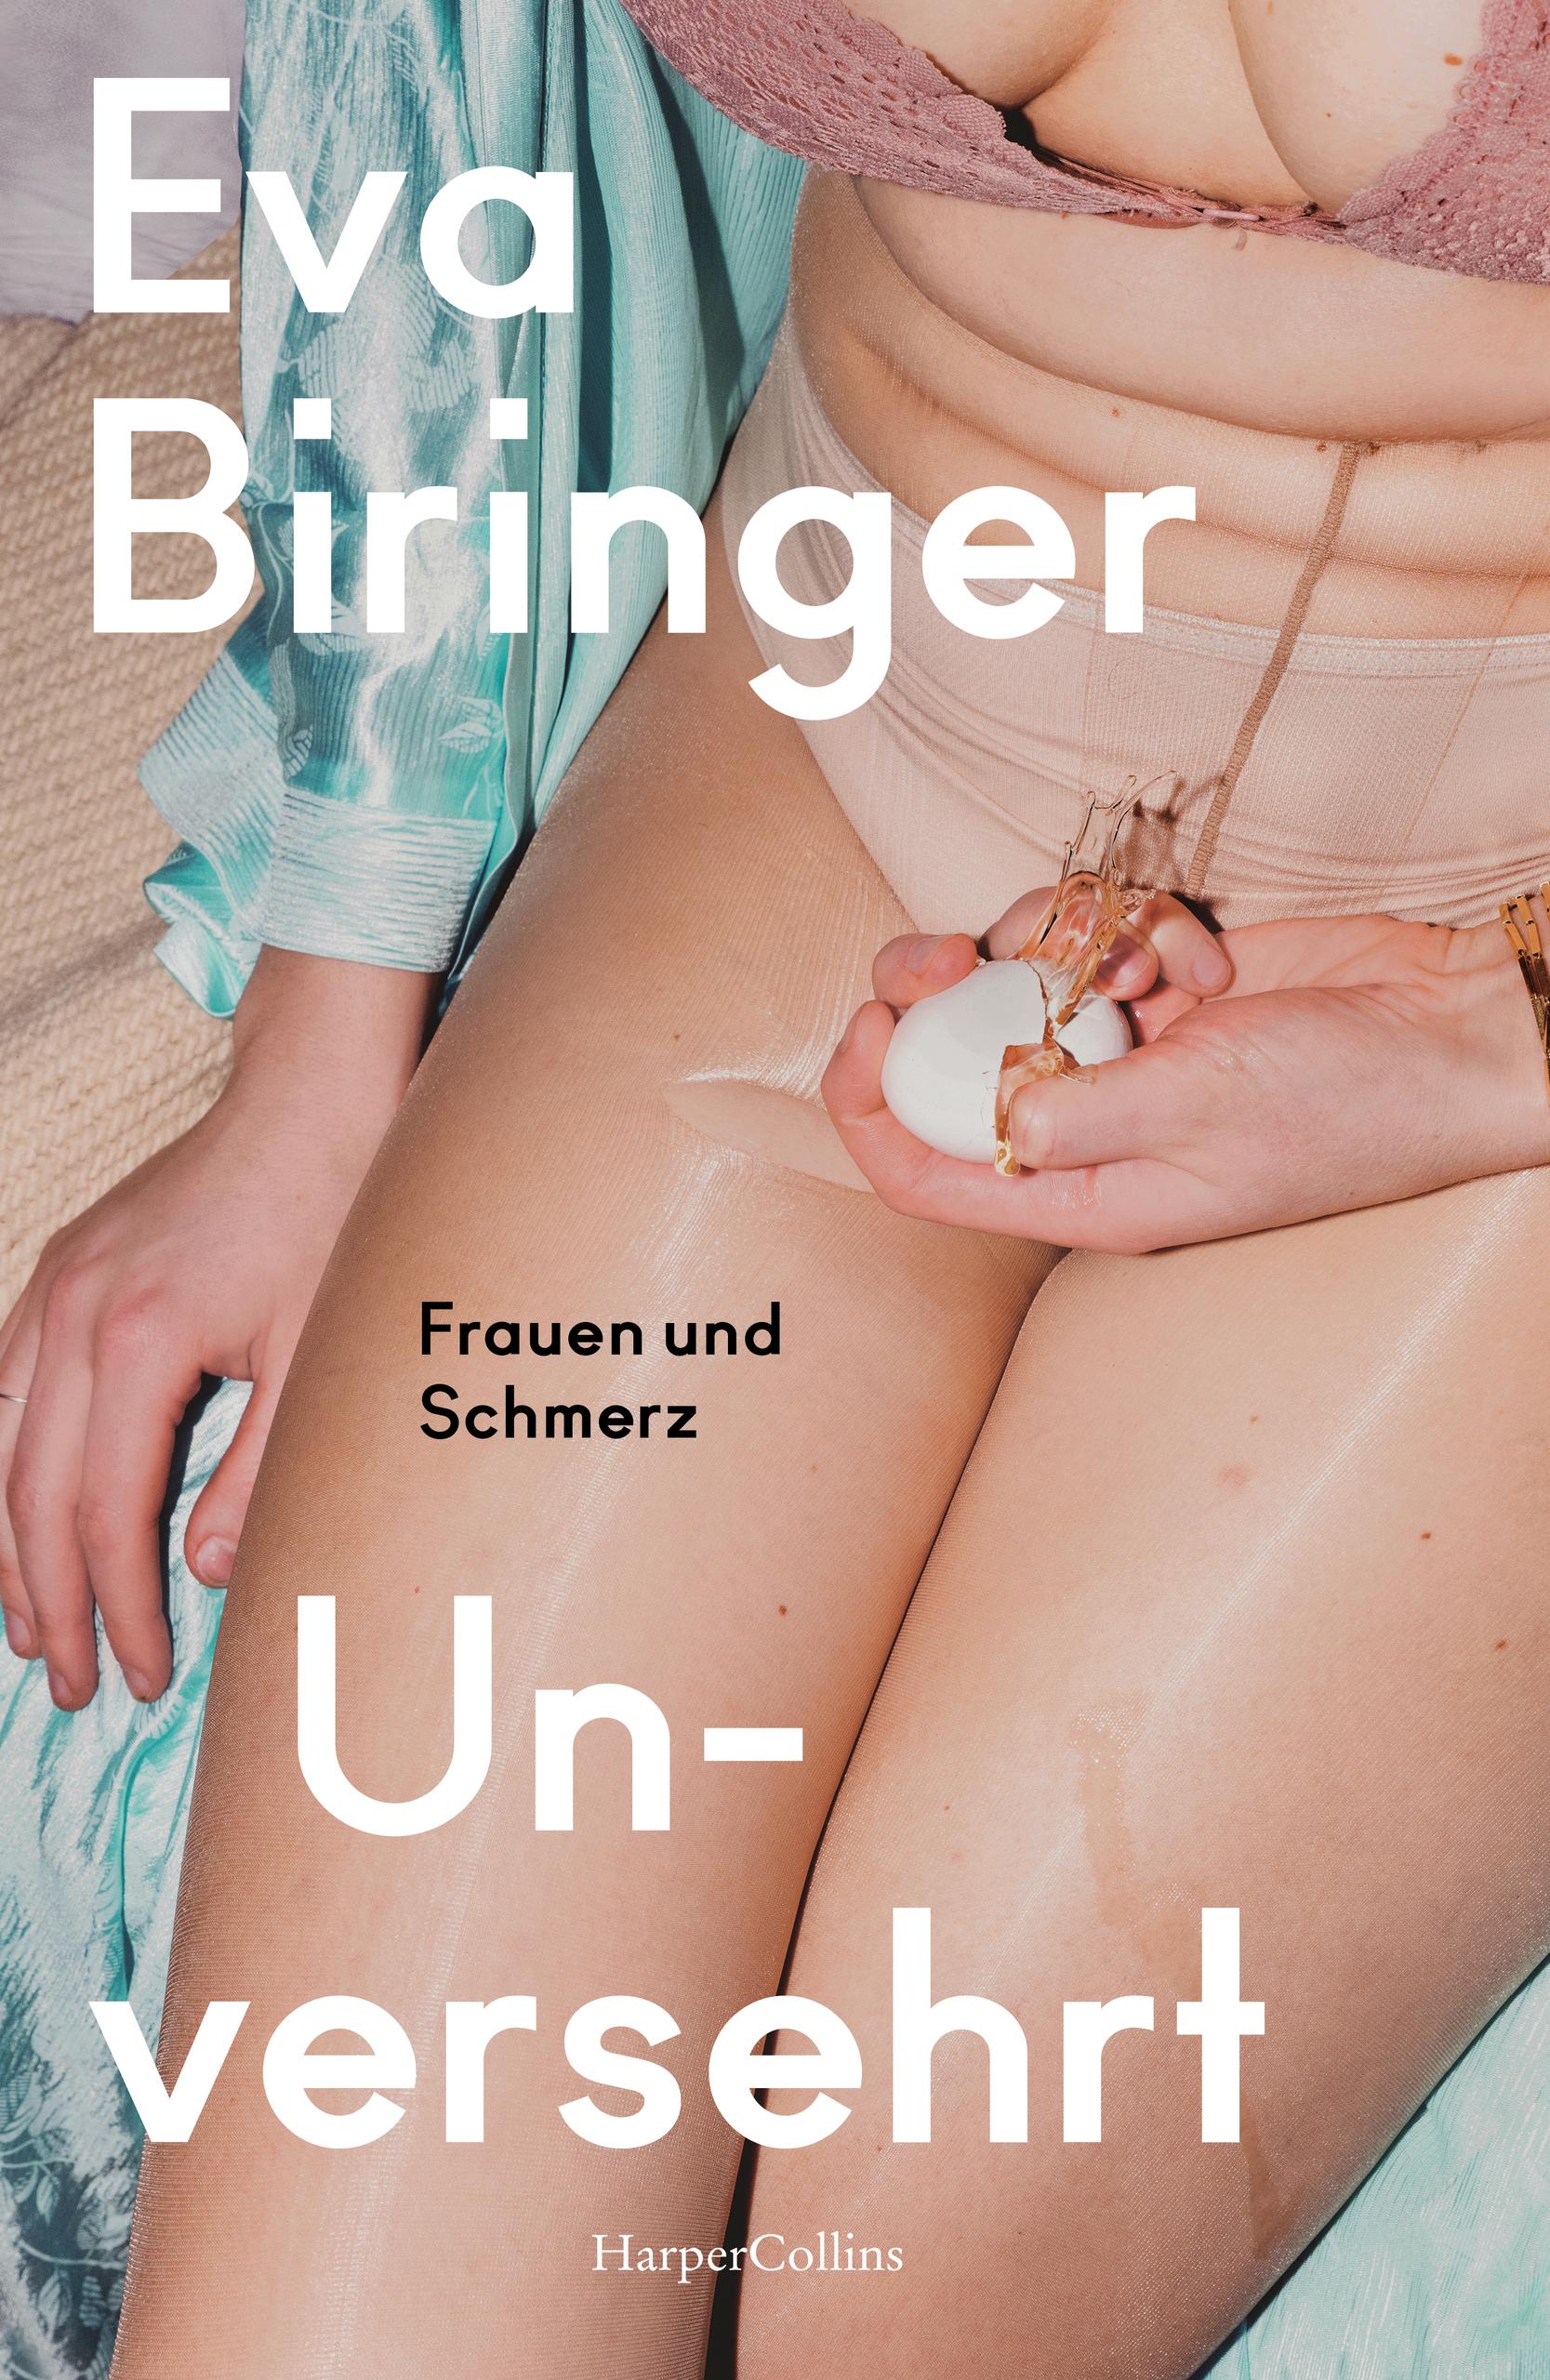 Premierenlesung von Eva Biringer in Berlin